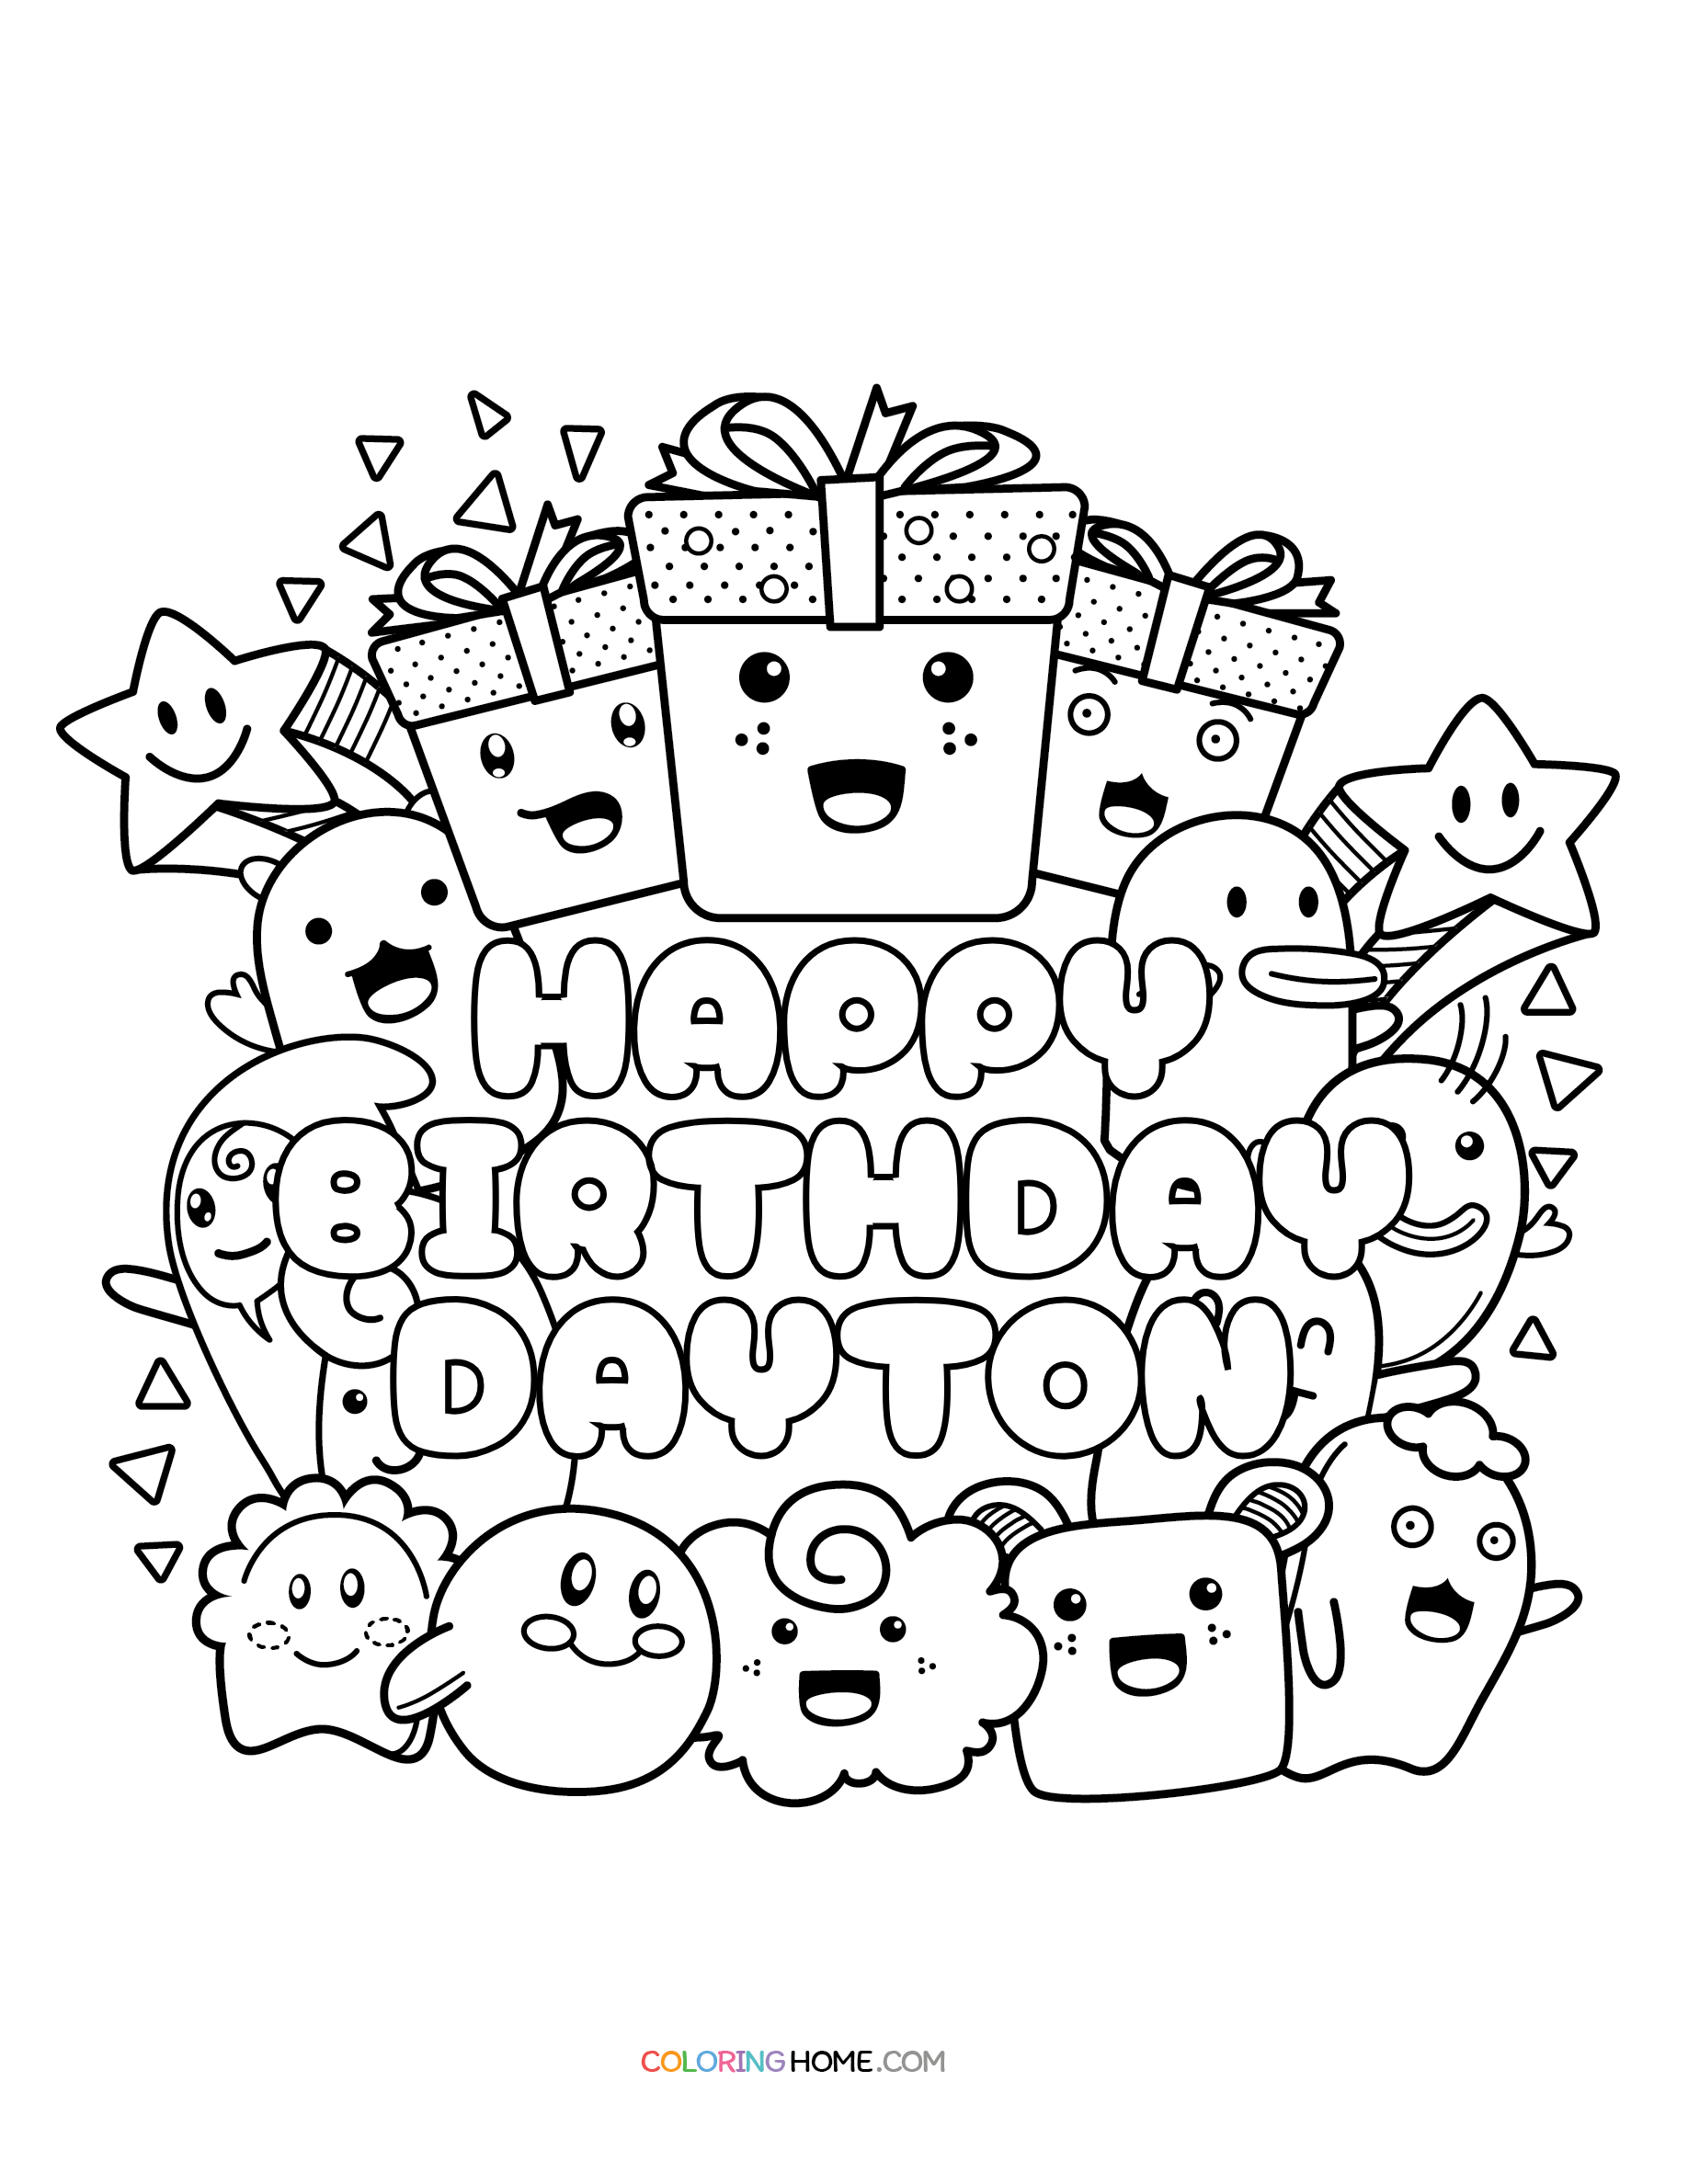 Happy Birthday Dayton coloring page